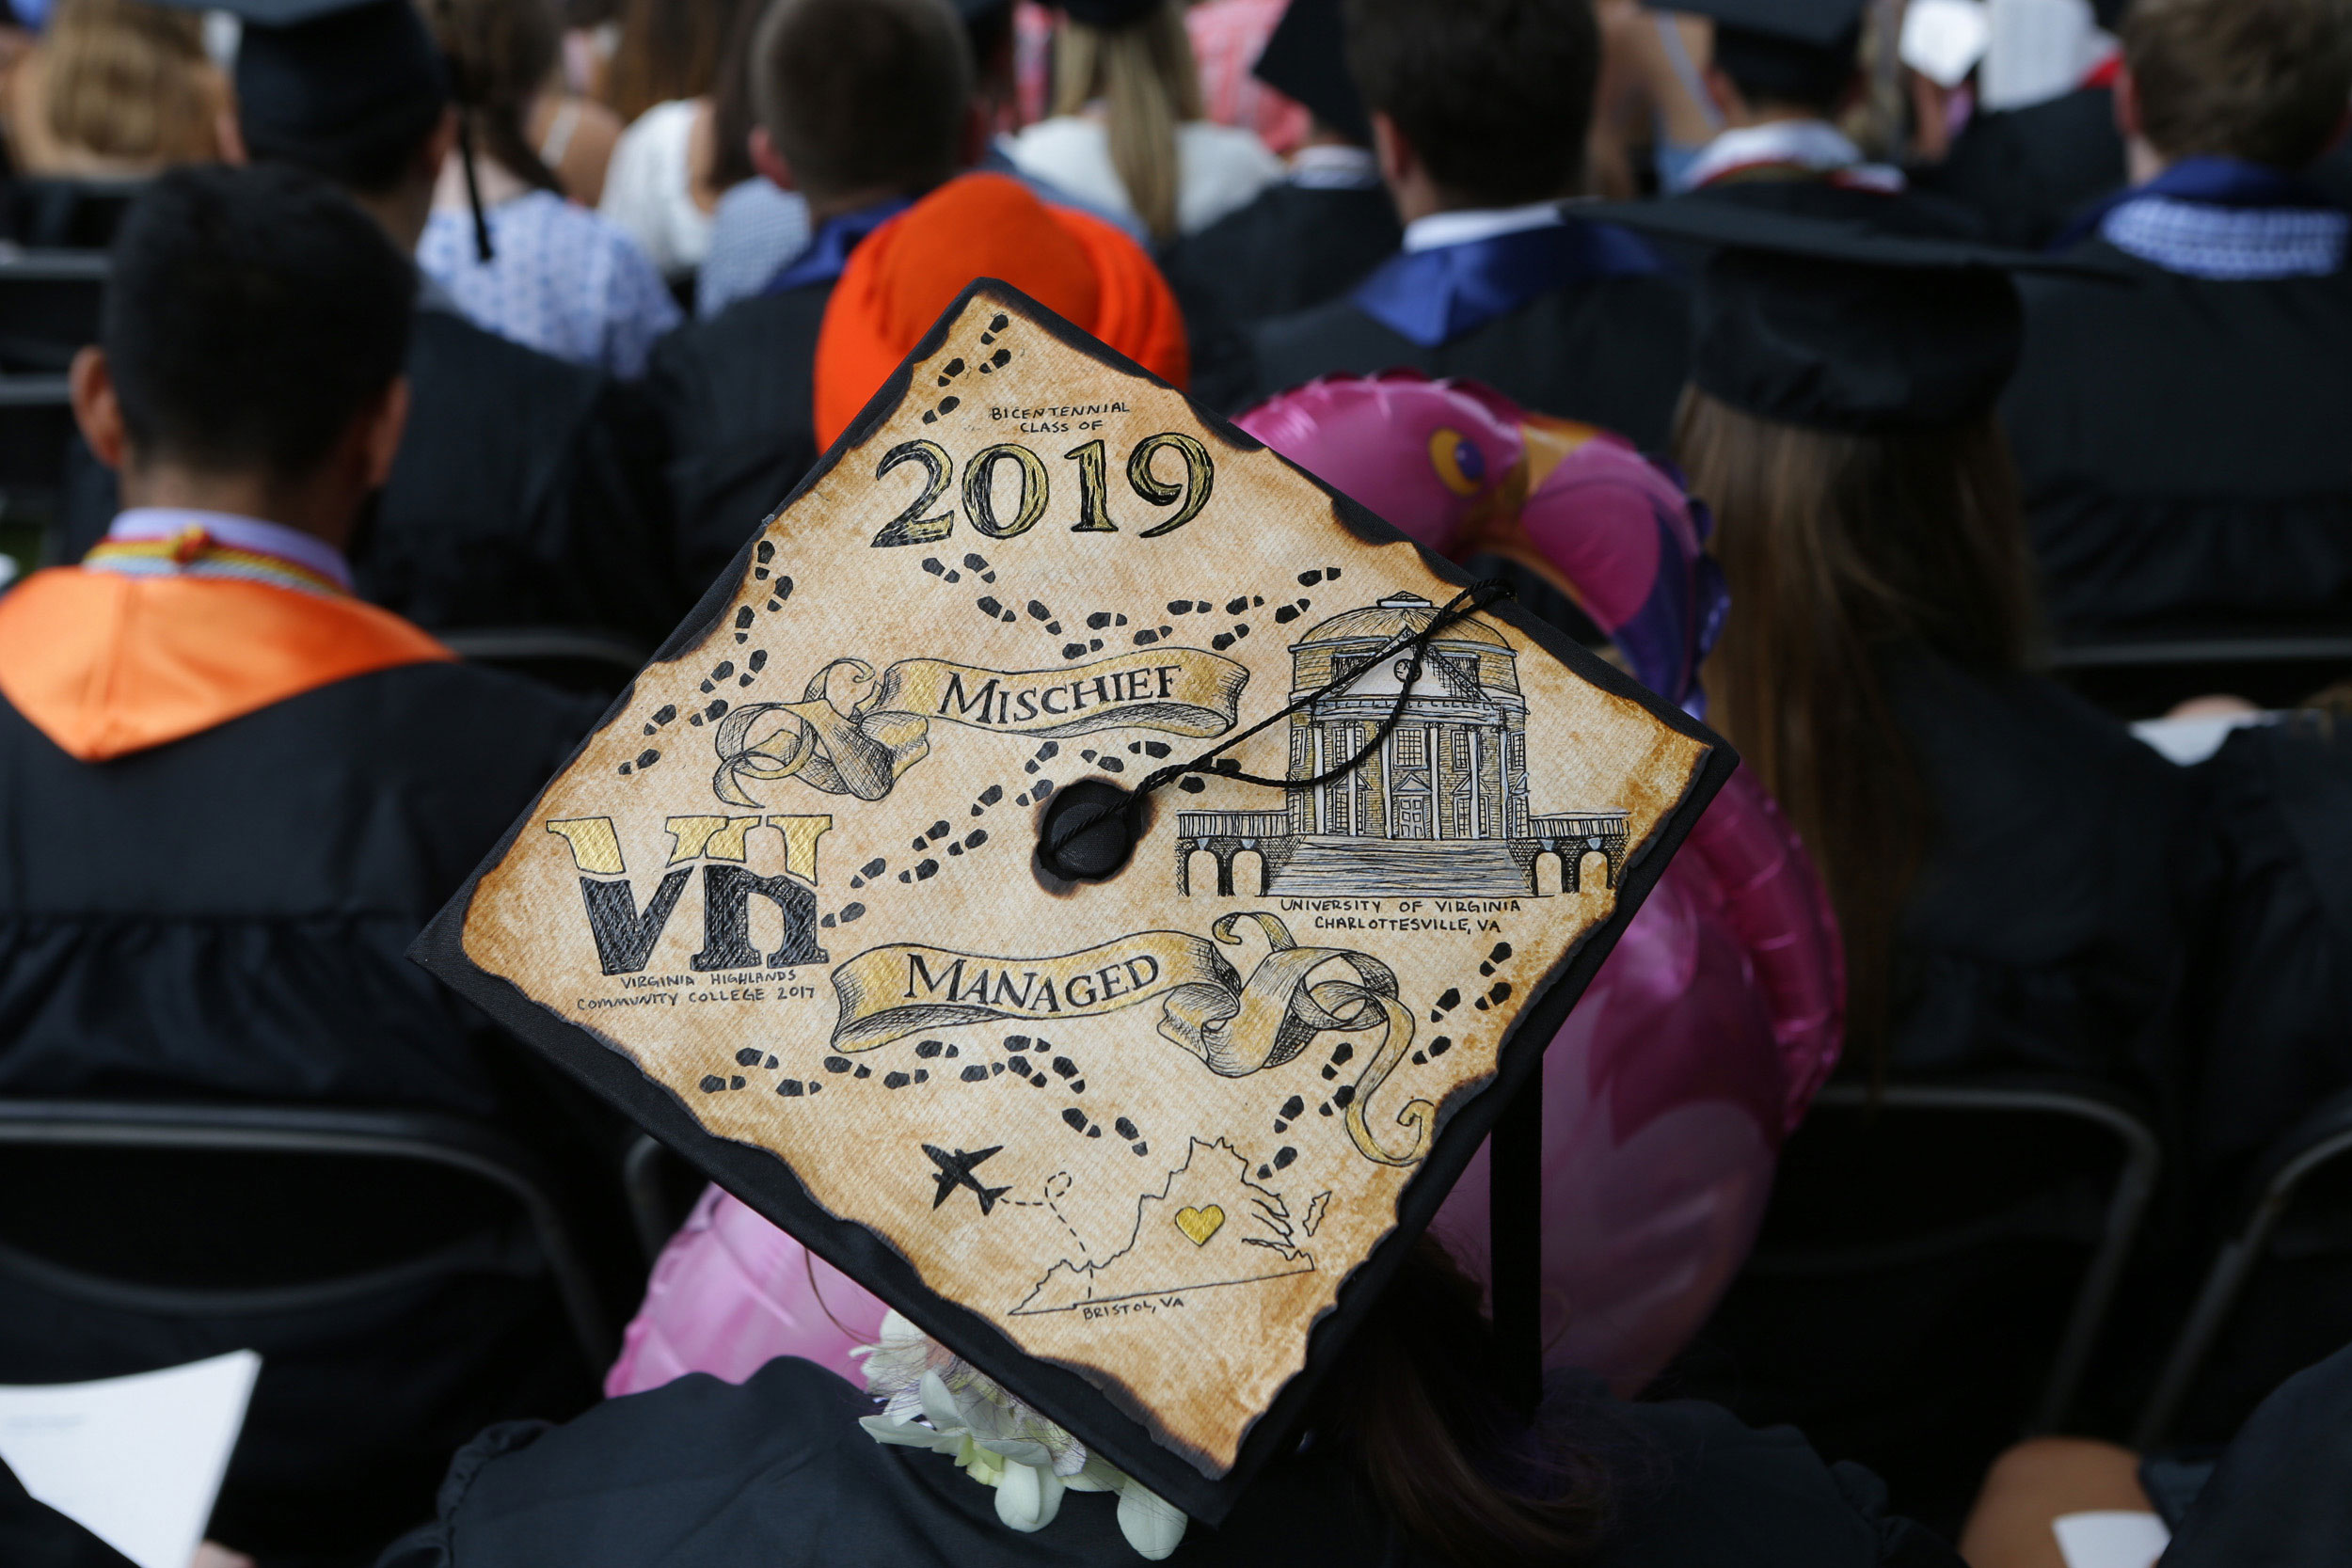 Graduation Cap reads: 2019 Mischief managed